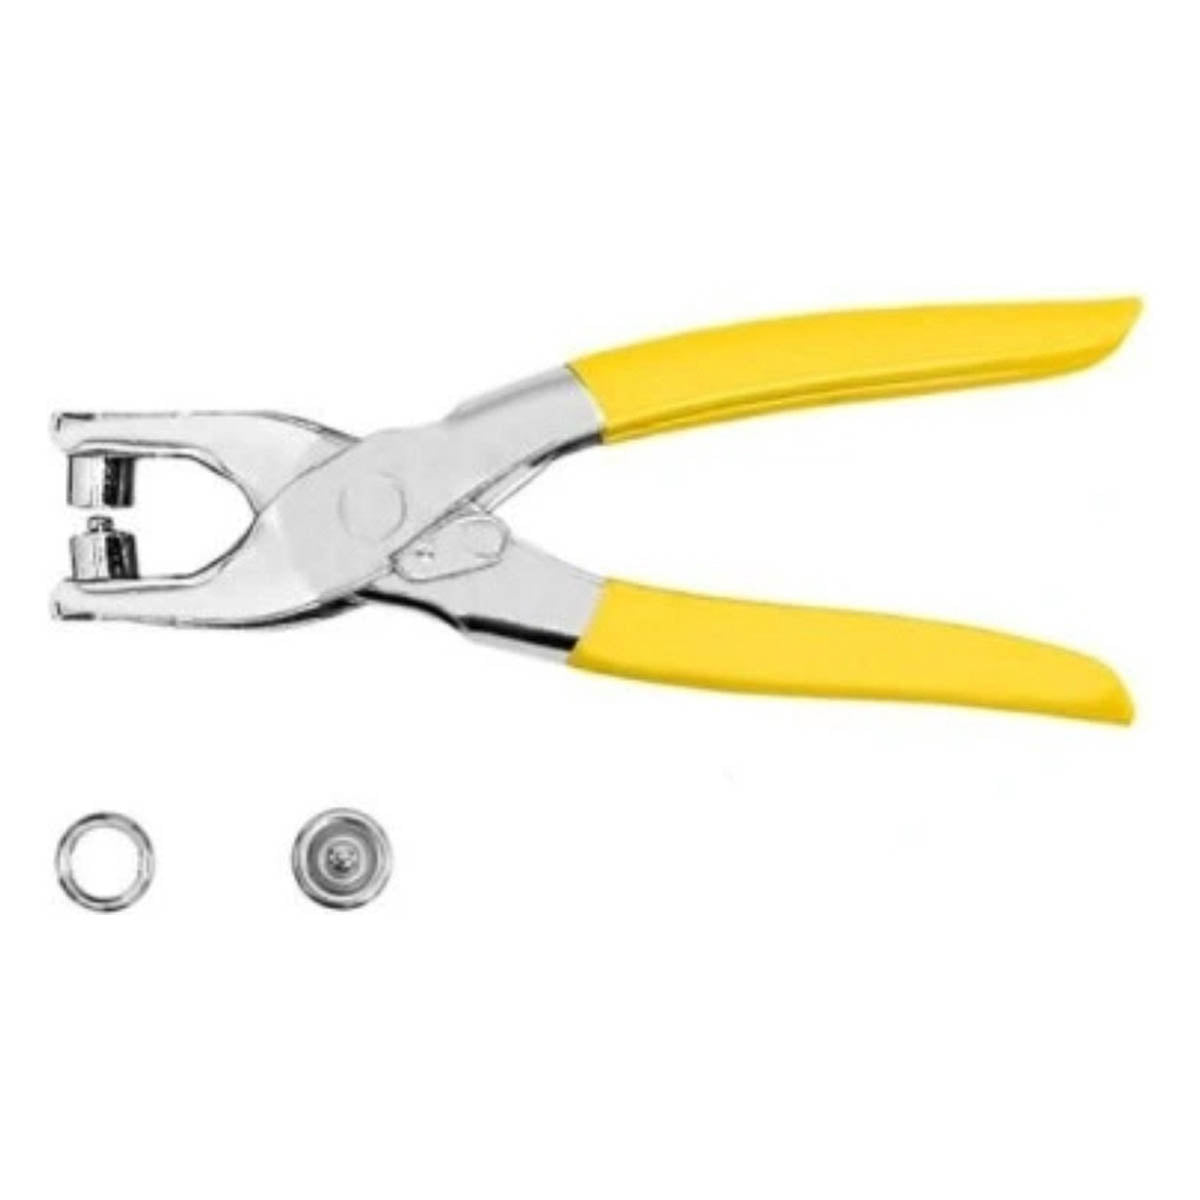 <tc>Ariko</tc> Revolver pliers 203-piece set - punch pliers - eyelet pliers - ring pliers - eyelet pliers - eyelet pliers - Snap fastener pliers - Belts & Leather - with supplies